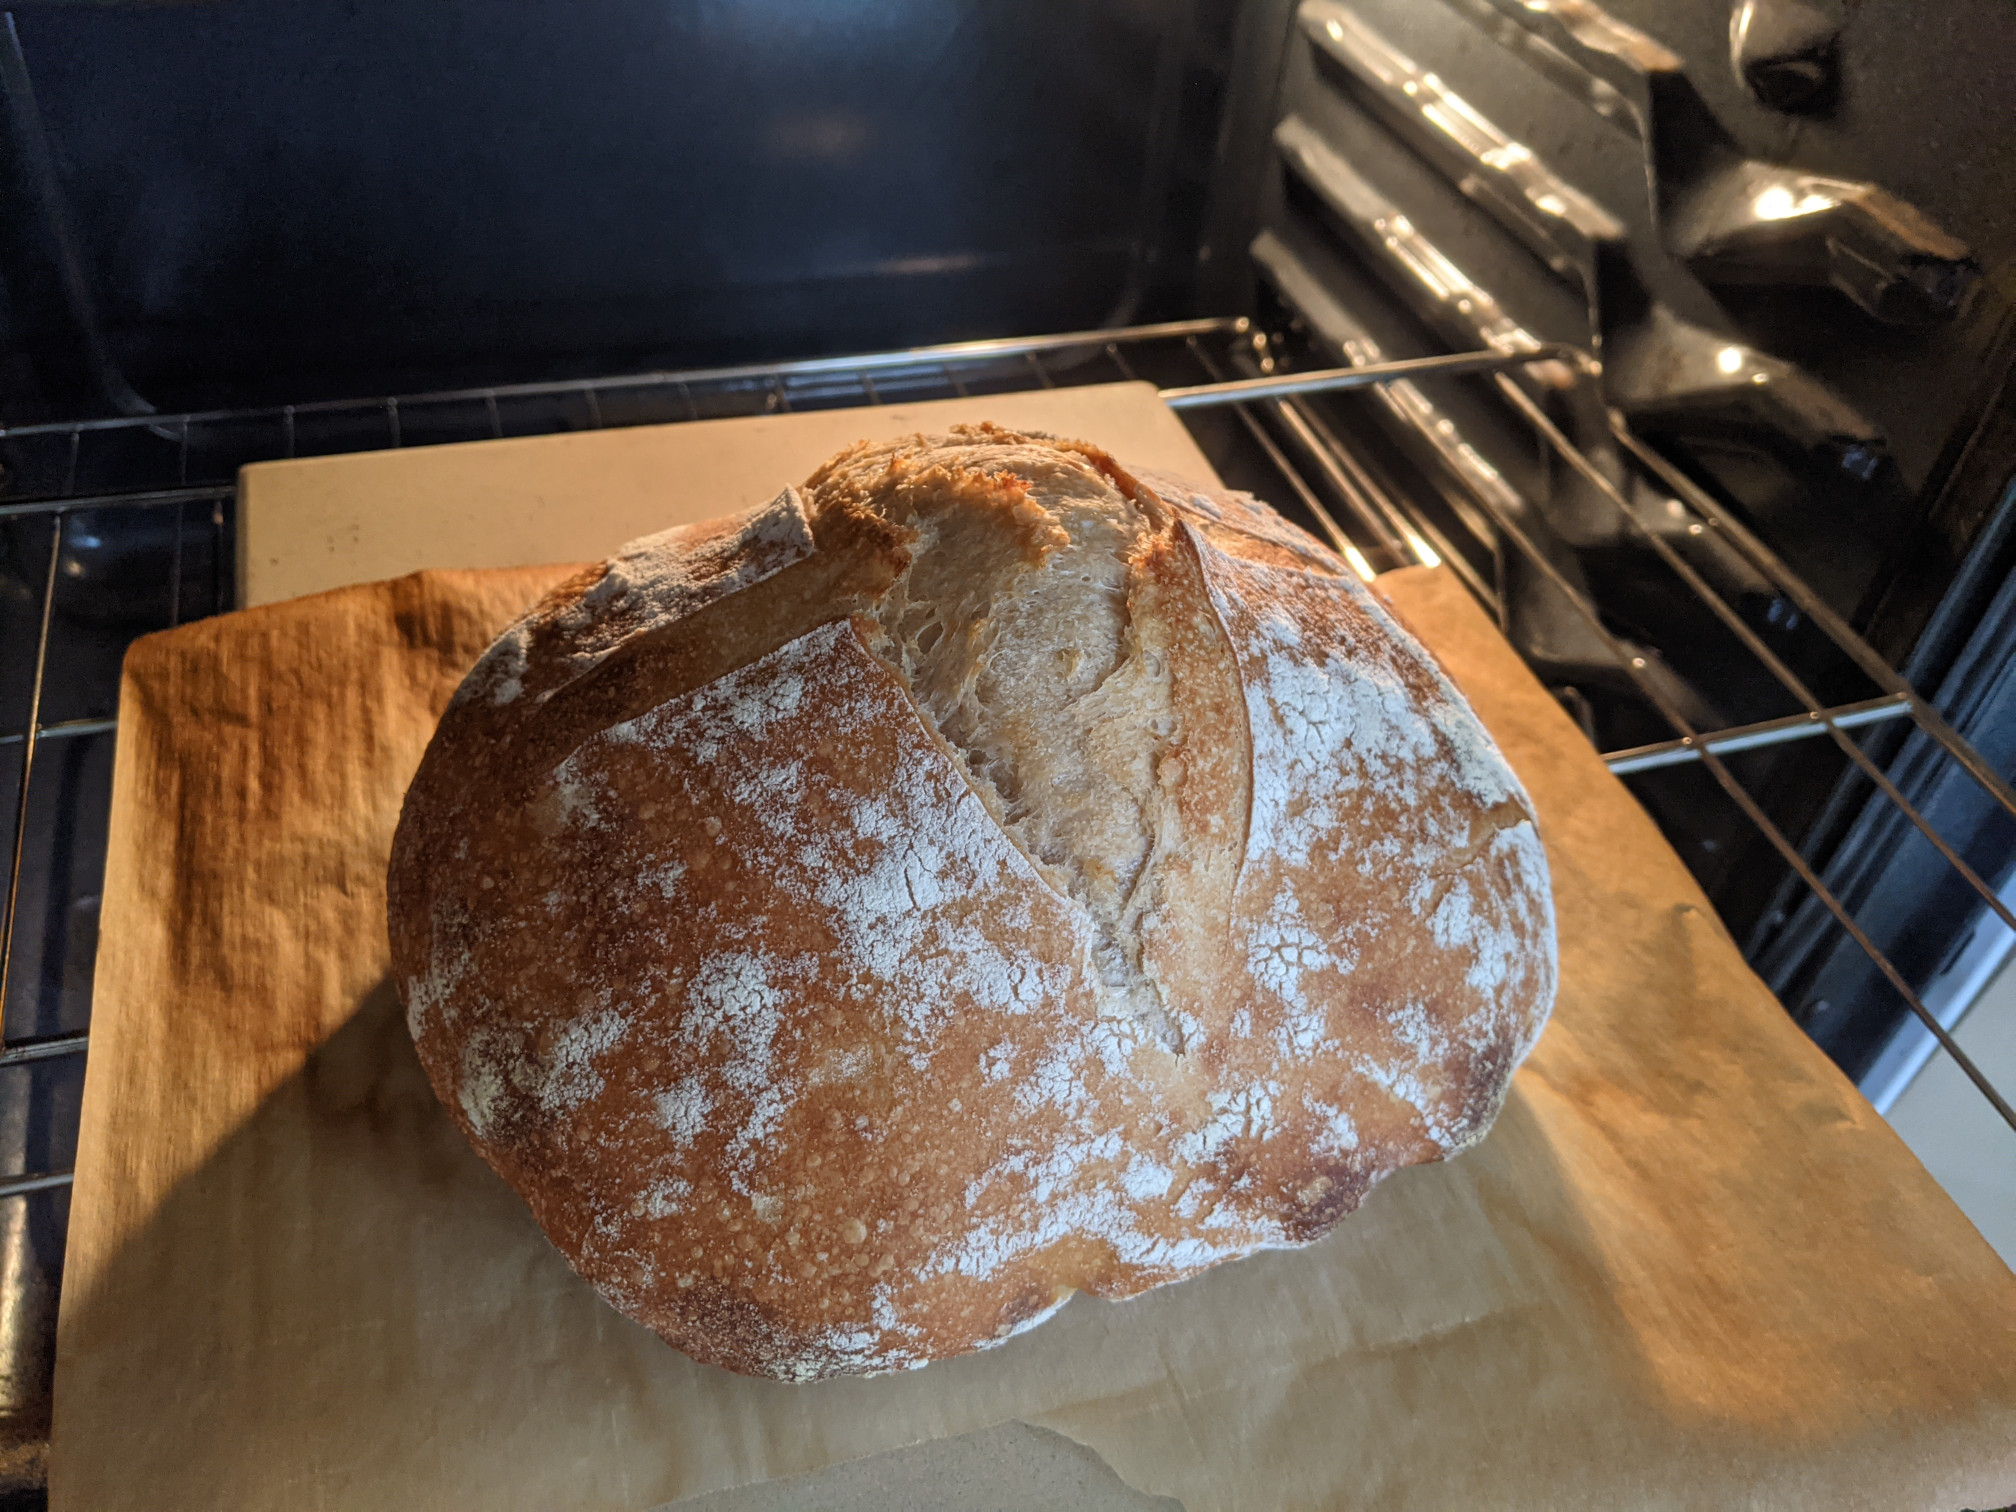 My homemade sourdough bread